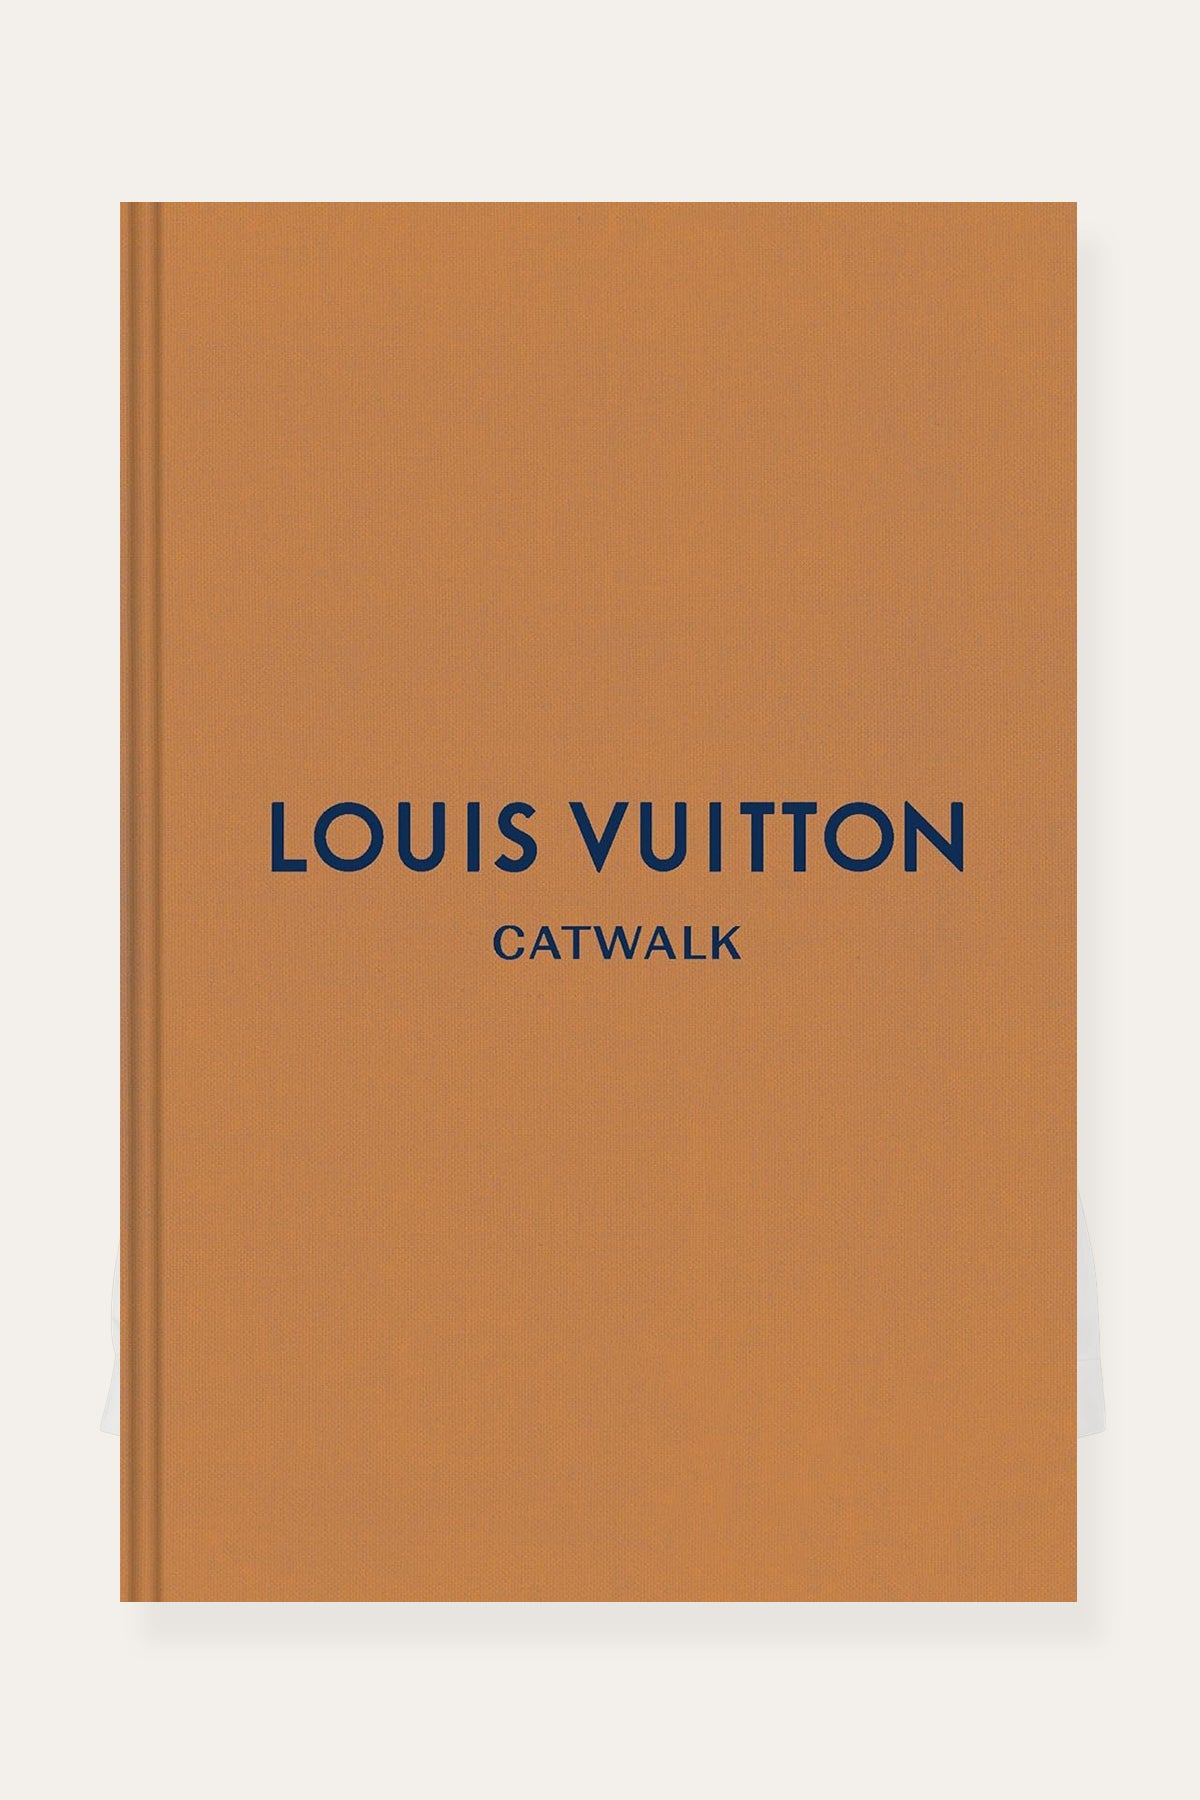 Louis Vuitton - Runway collection - Earrings - Catawiki